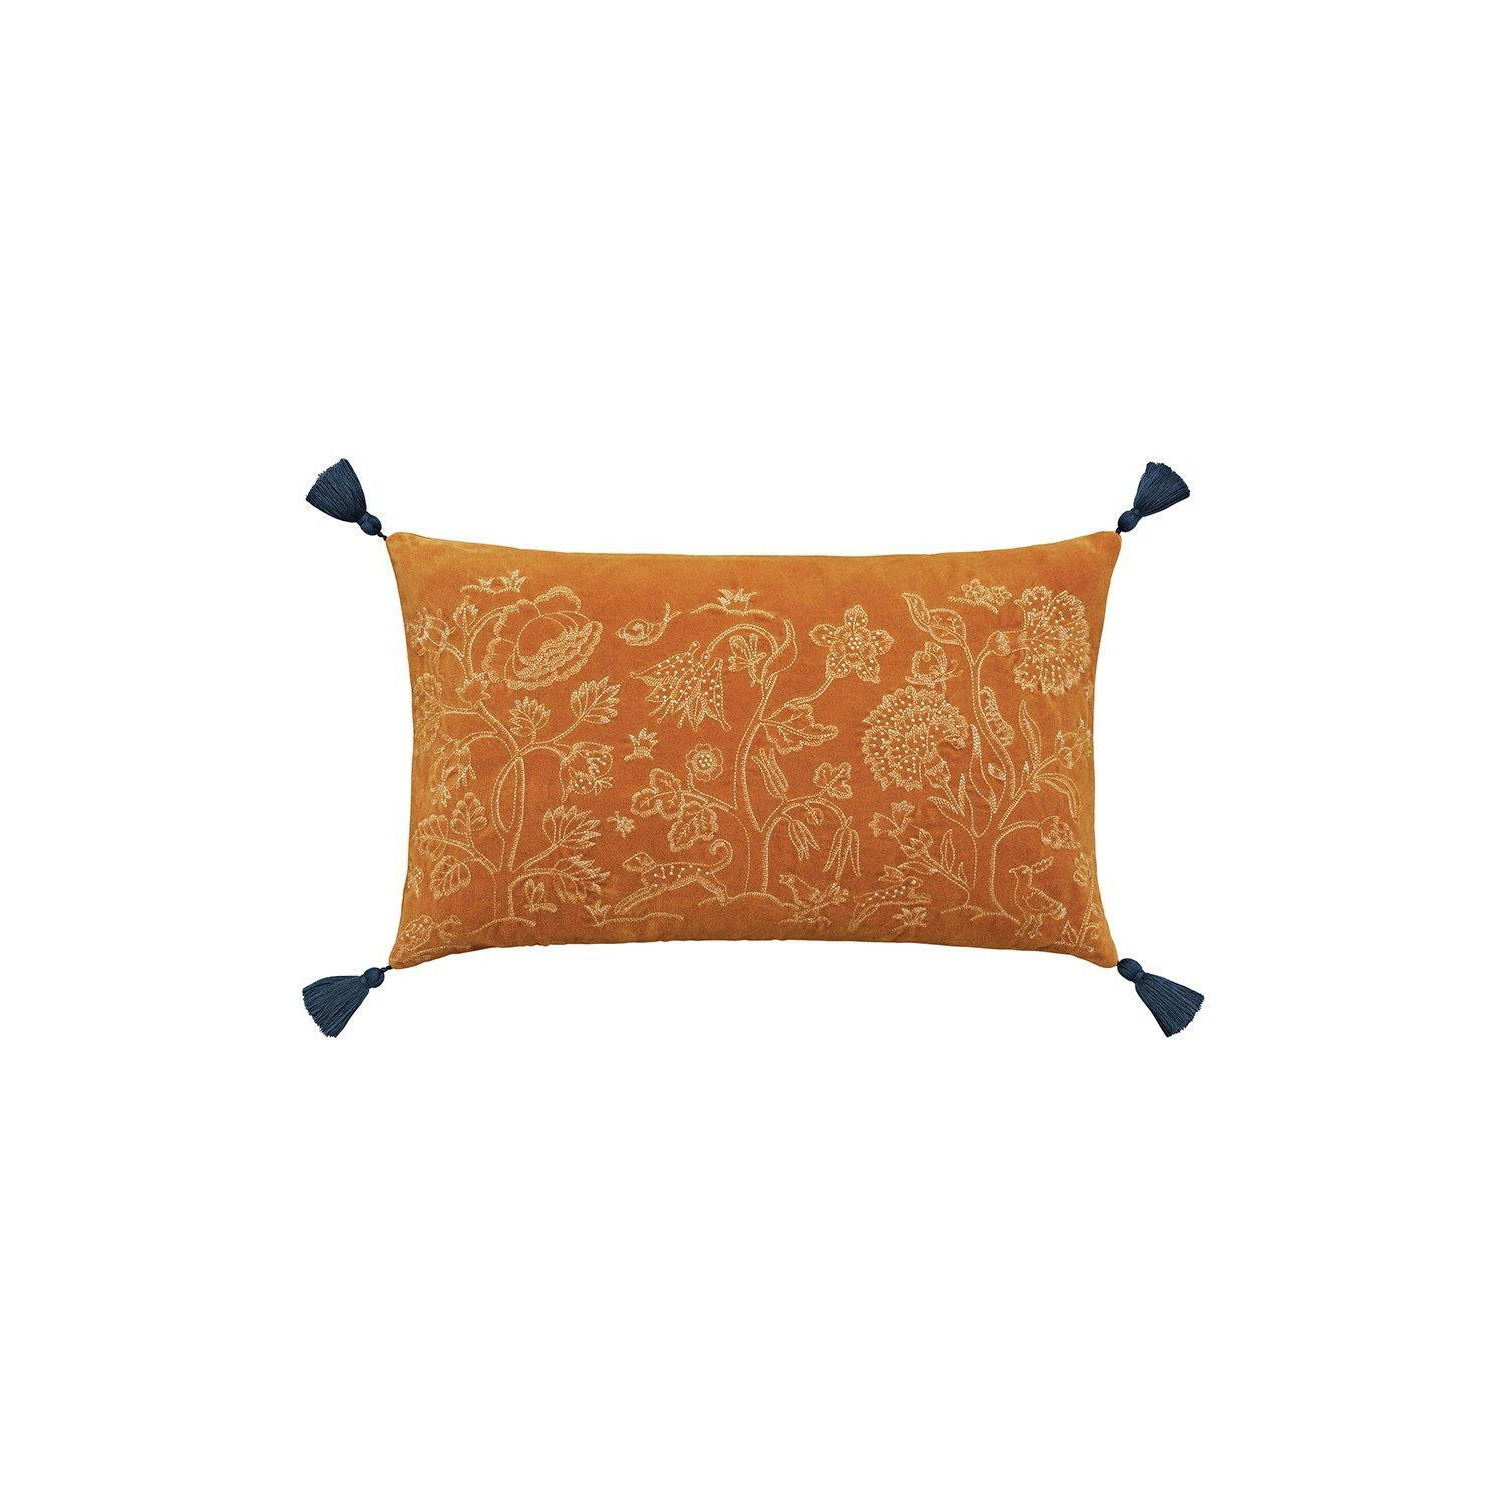 'Honeysuckle & Tulip' Cushion 50X30cm - image 1